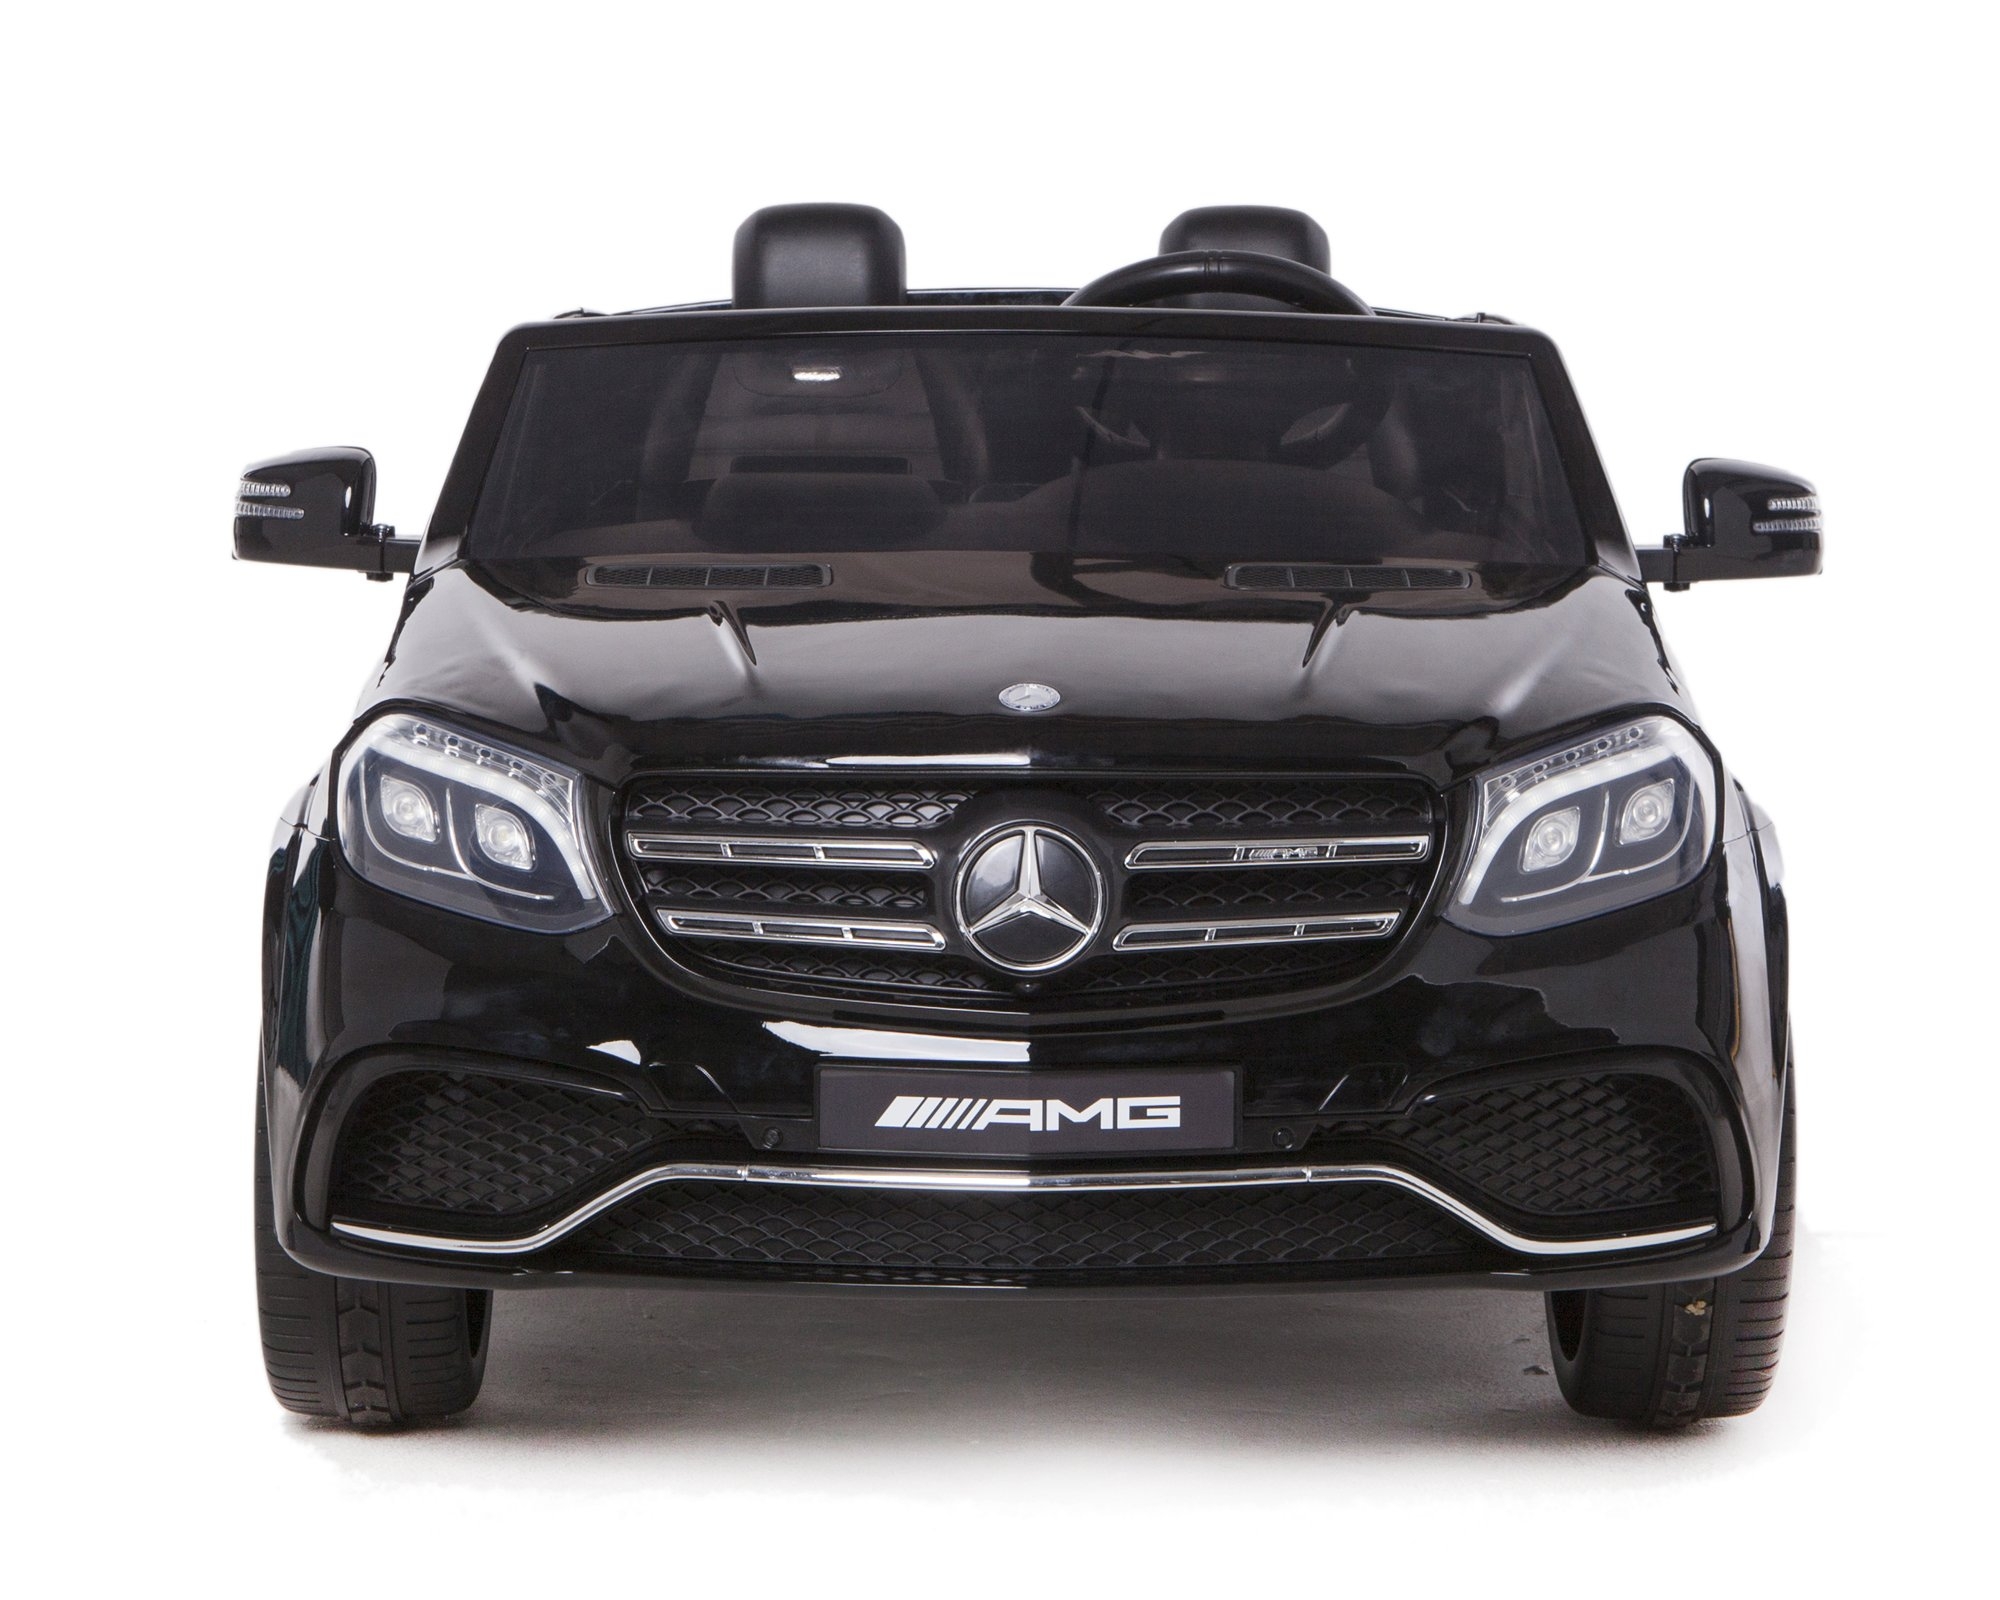 Licensed Mercedes G.L.S 63 AMG 24V 4WD Electric Ride on Car With Parental Control – Black